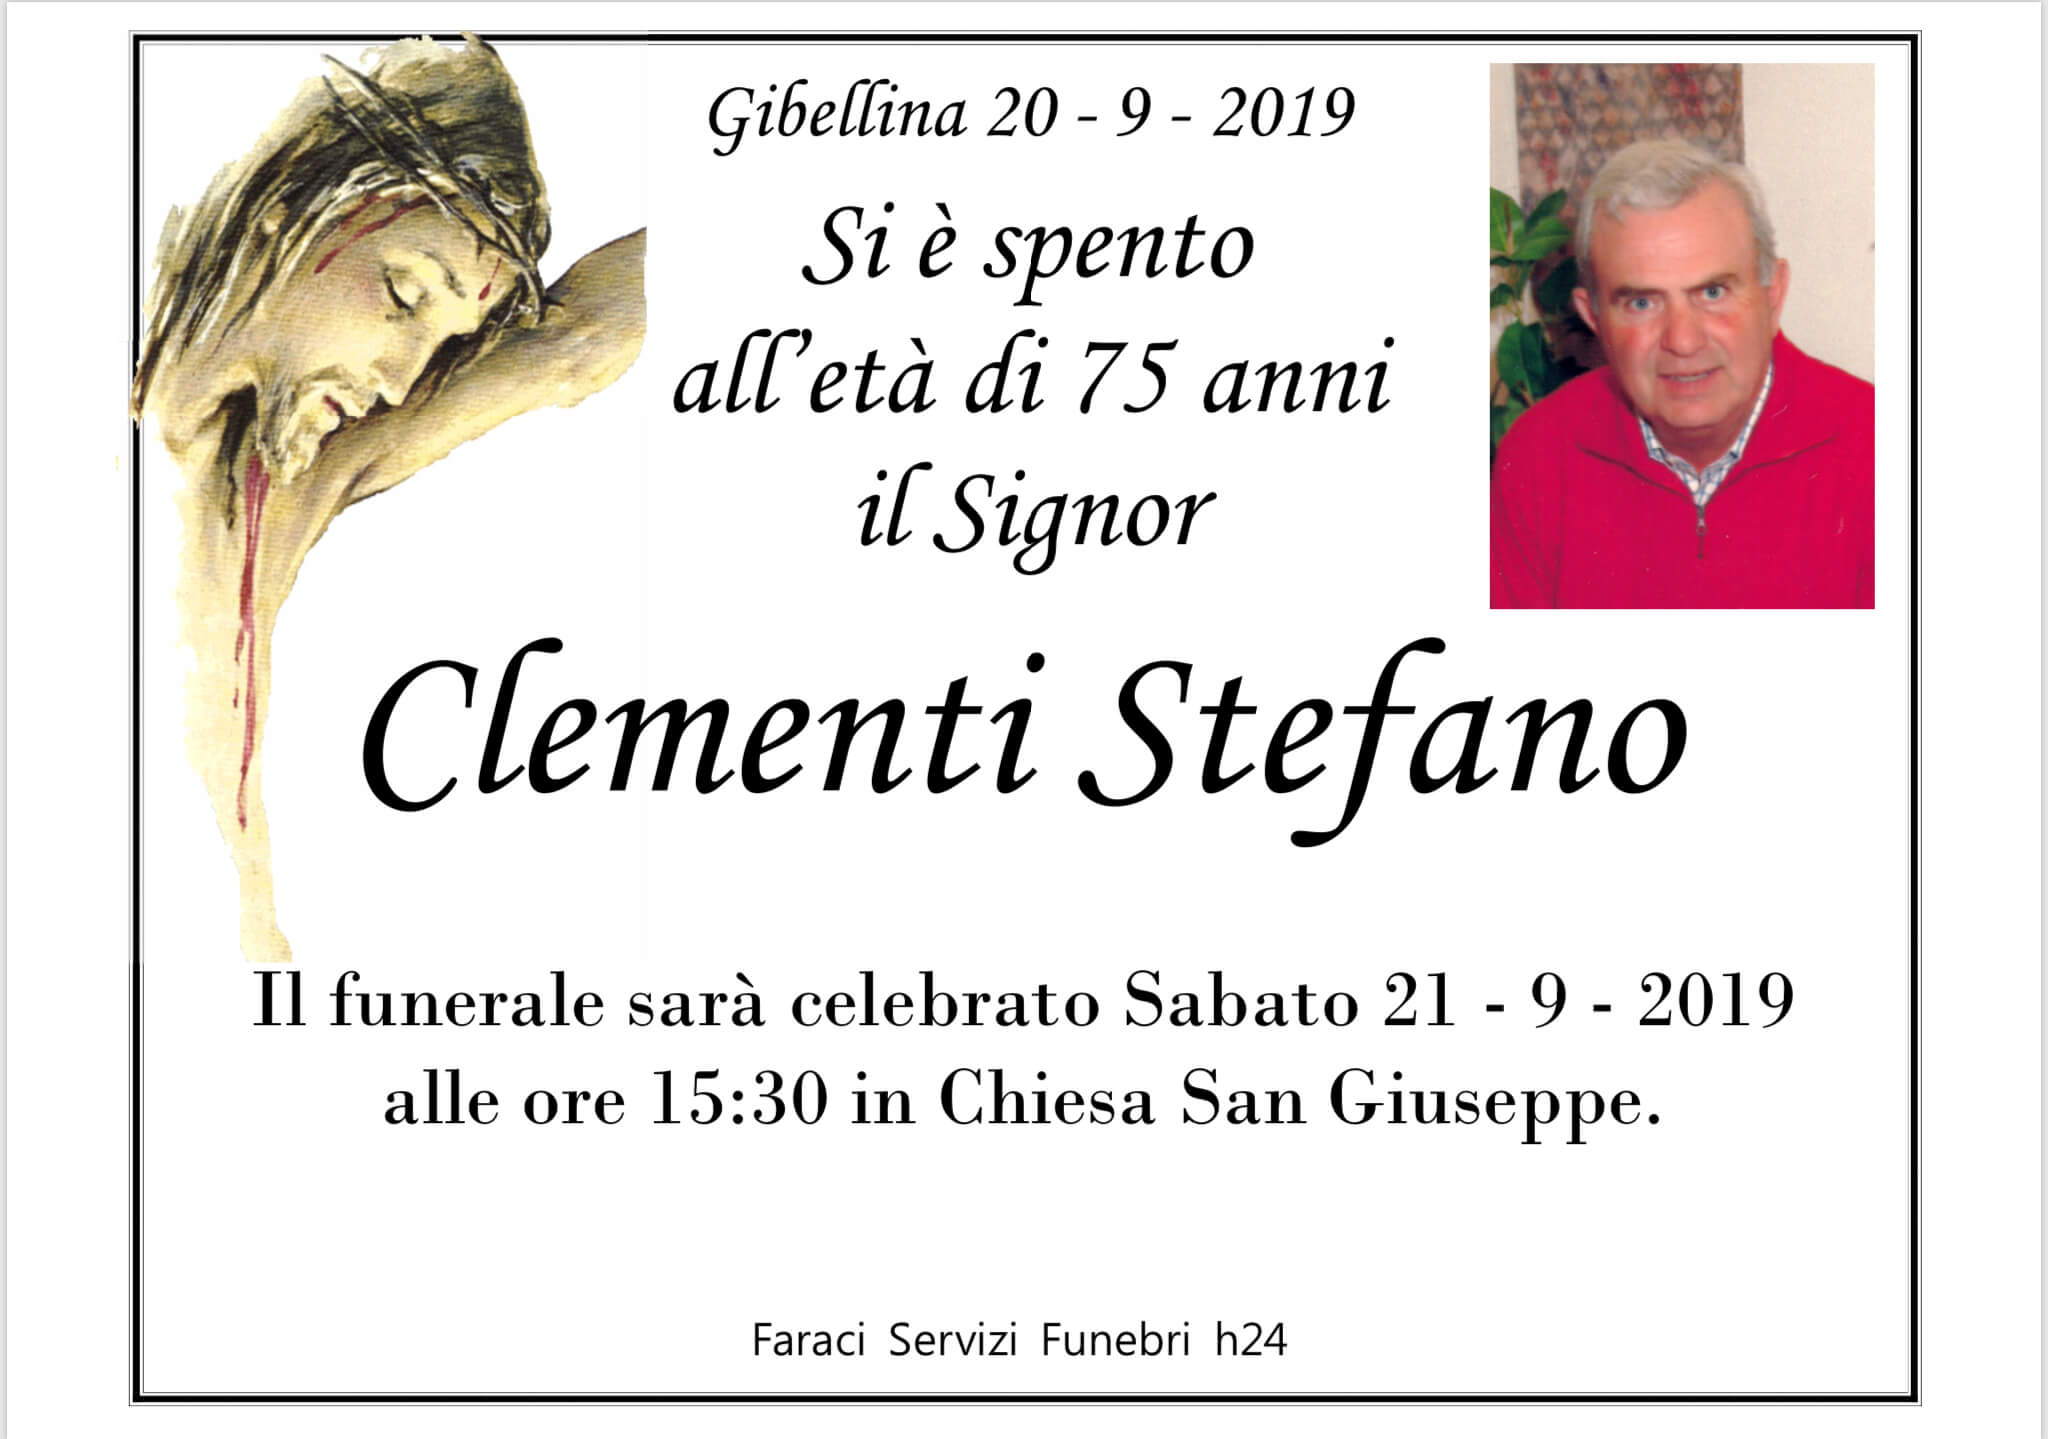 Stefano Clementi